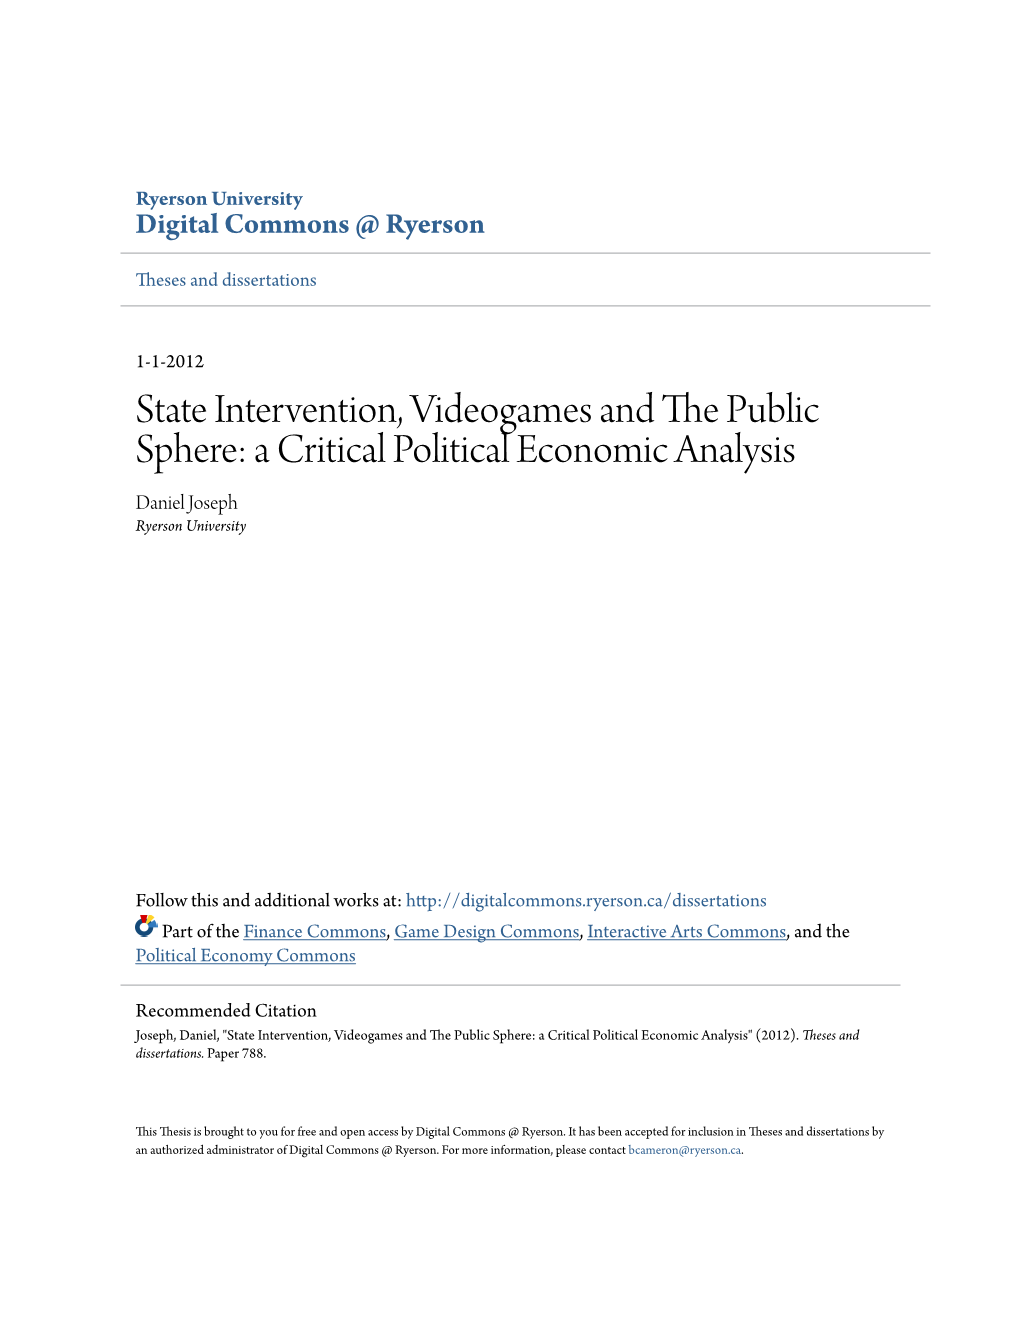 State Intervention, Videogames and the Public Sphere: a Critical Political Economic Analysis Daniel Joseph Ryerson University